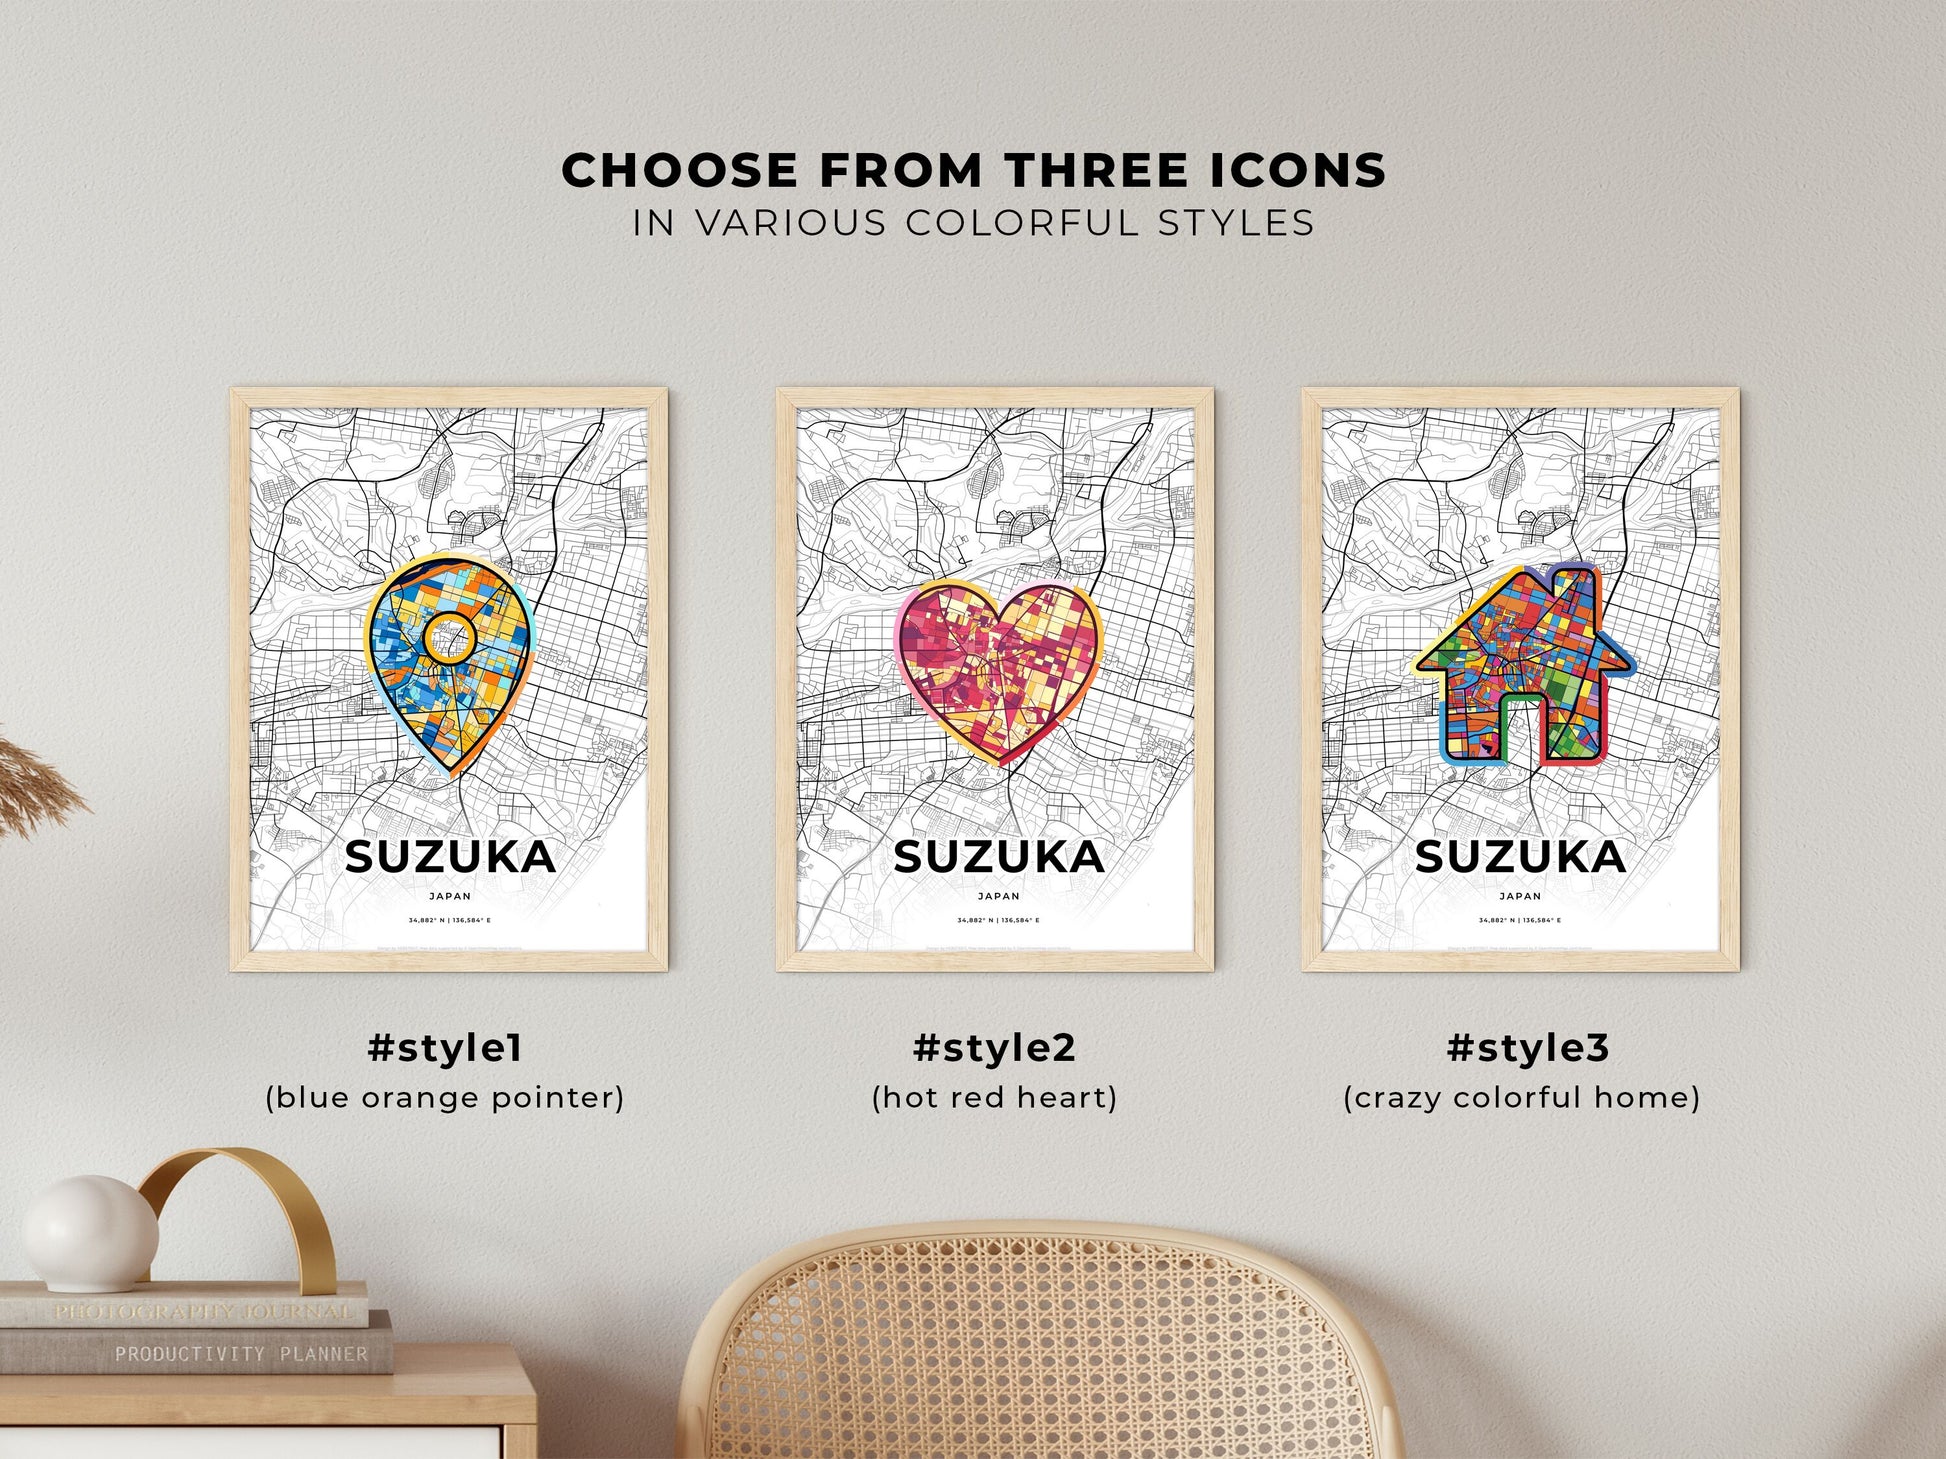 SUZUKA JAPAN minimal art map with a colorful icon.